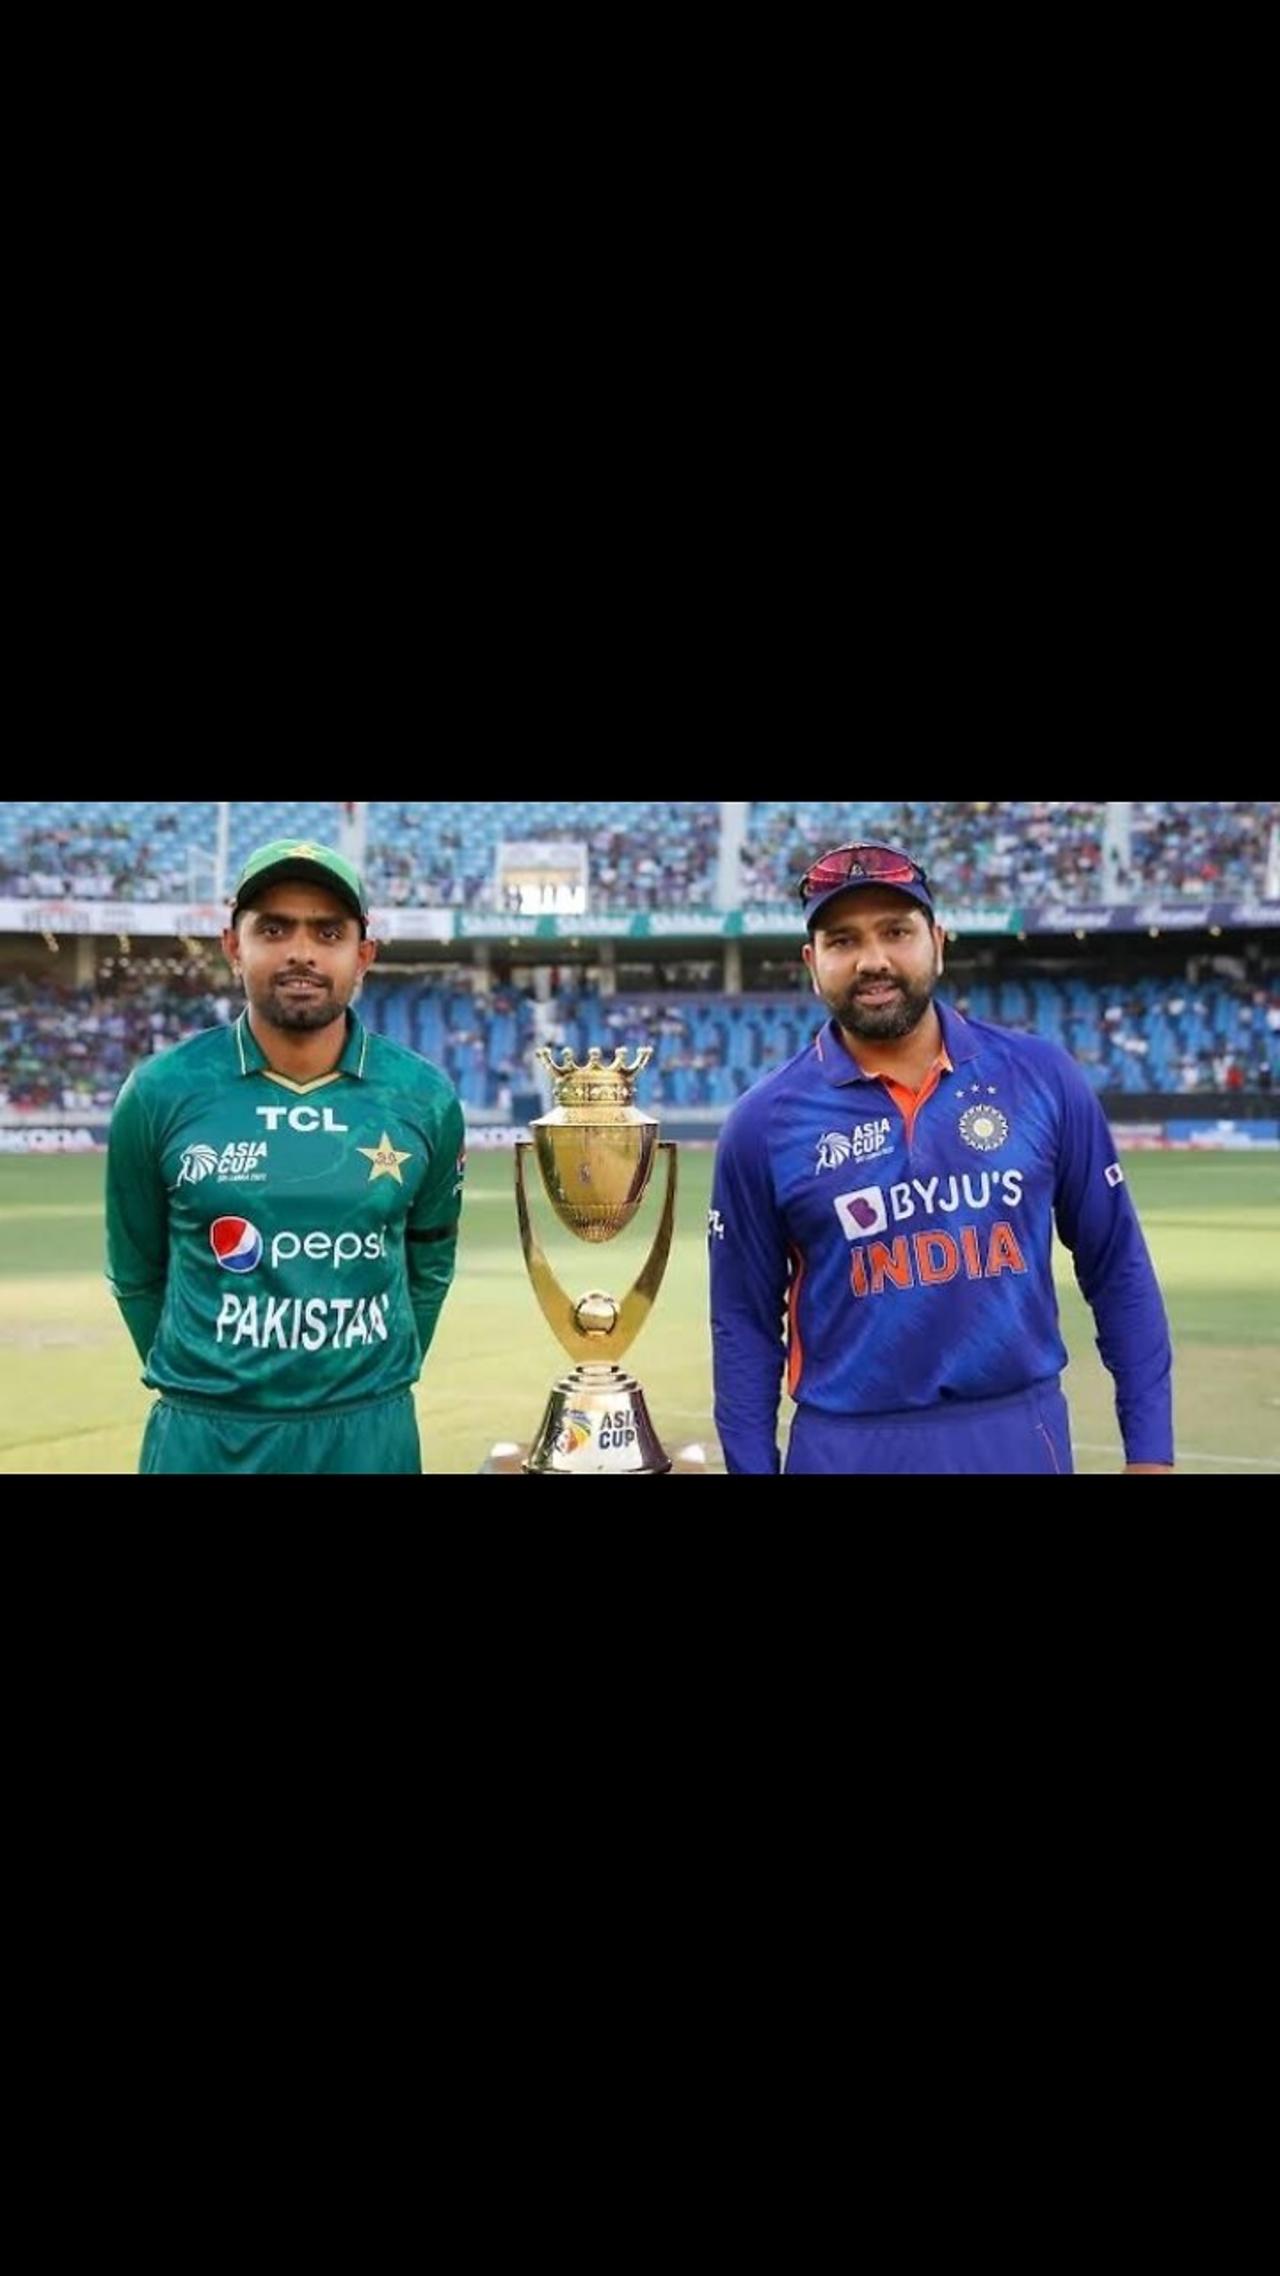 Pakistan vs india asia cup 2022